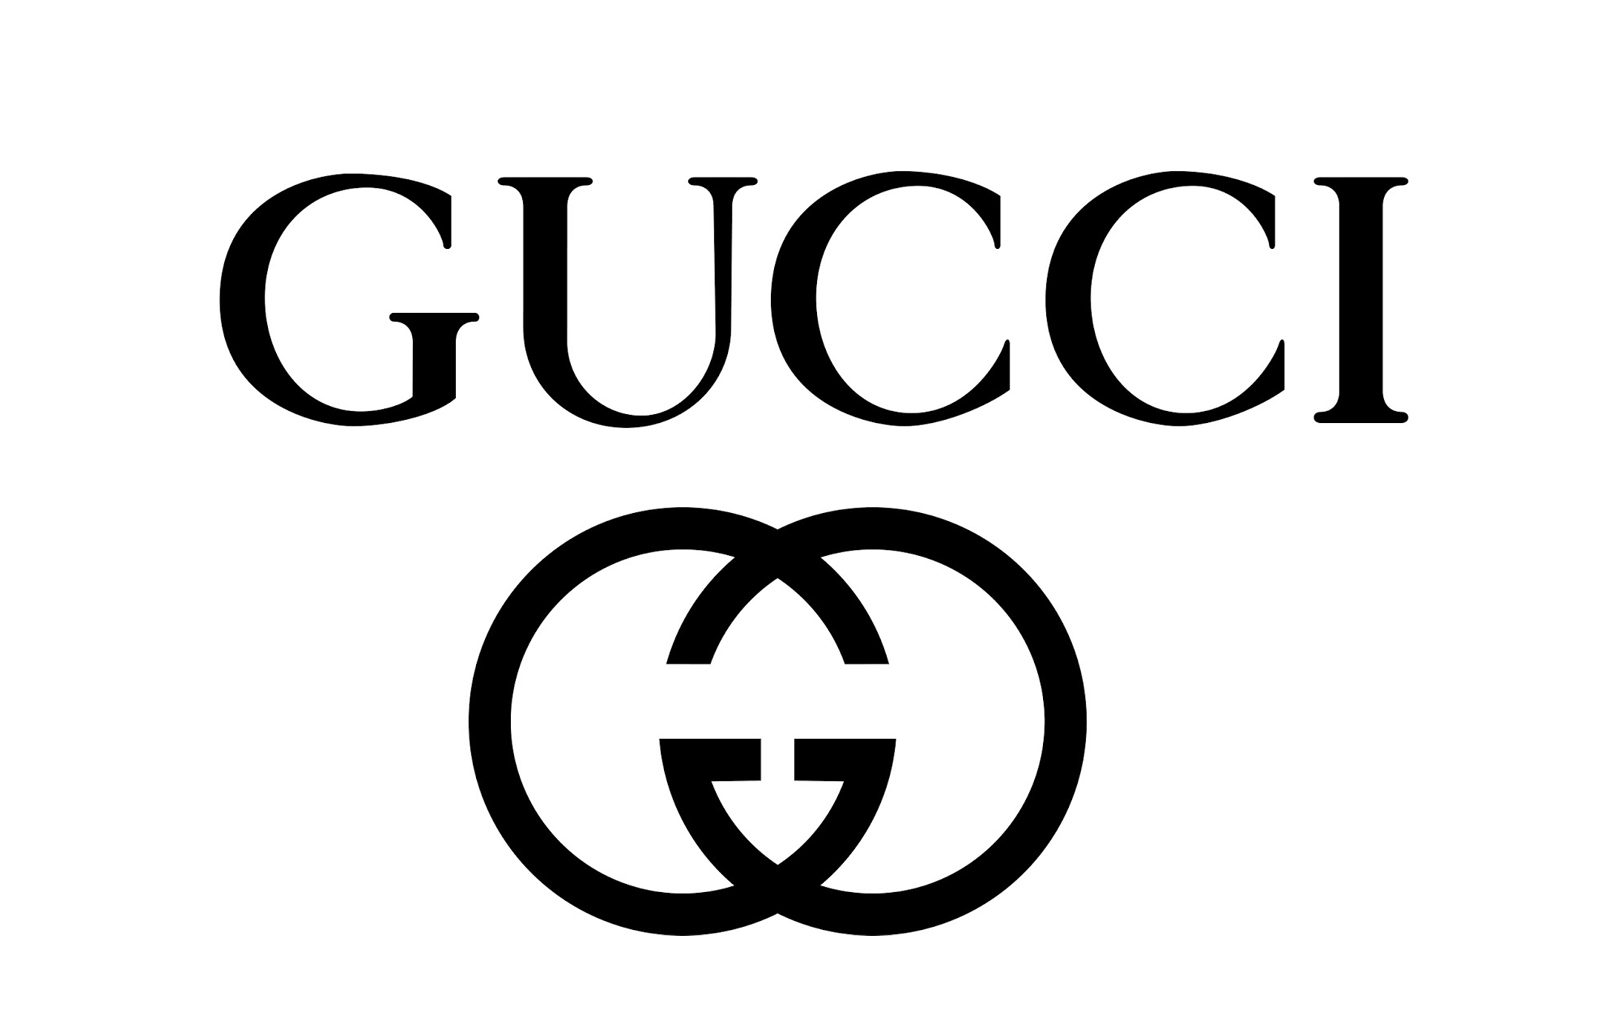 Gucci-logo